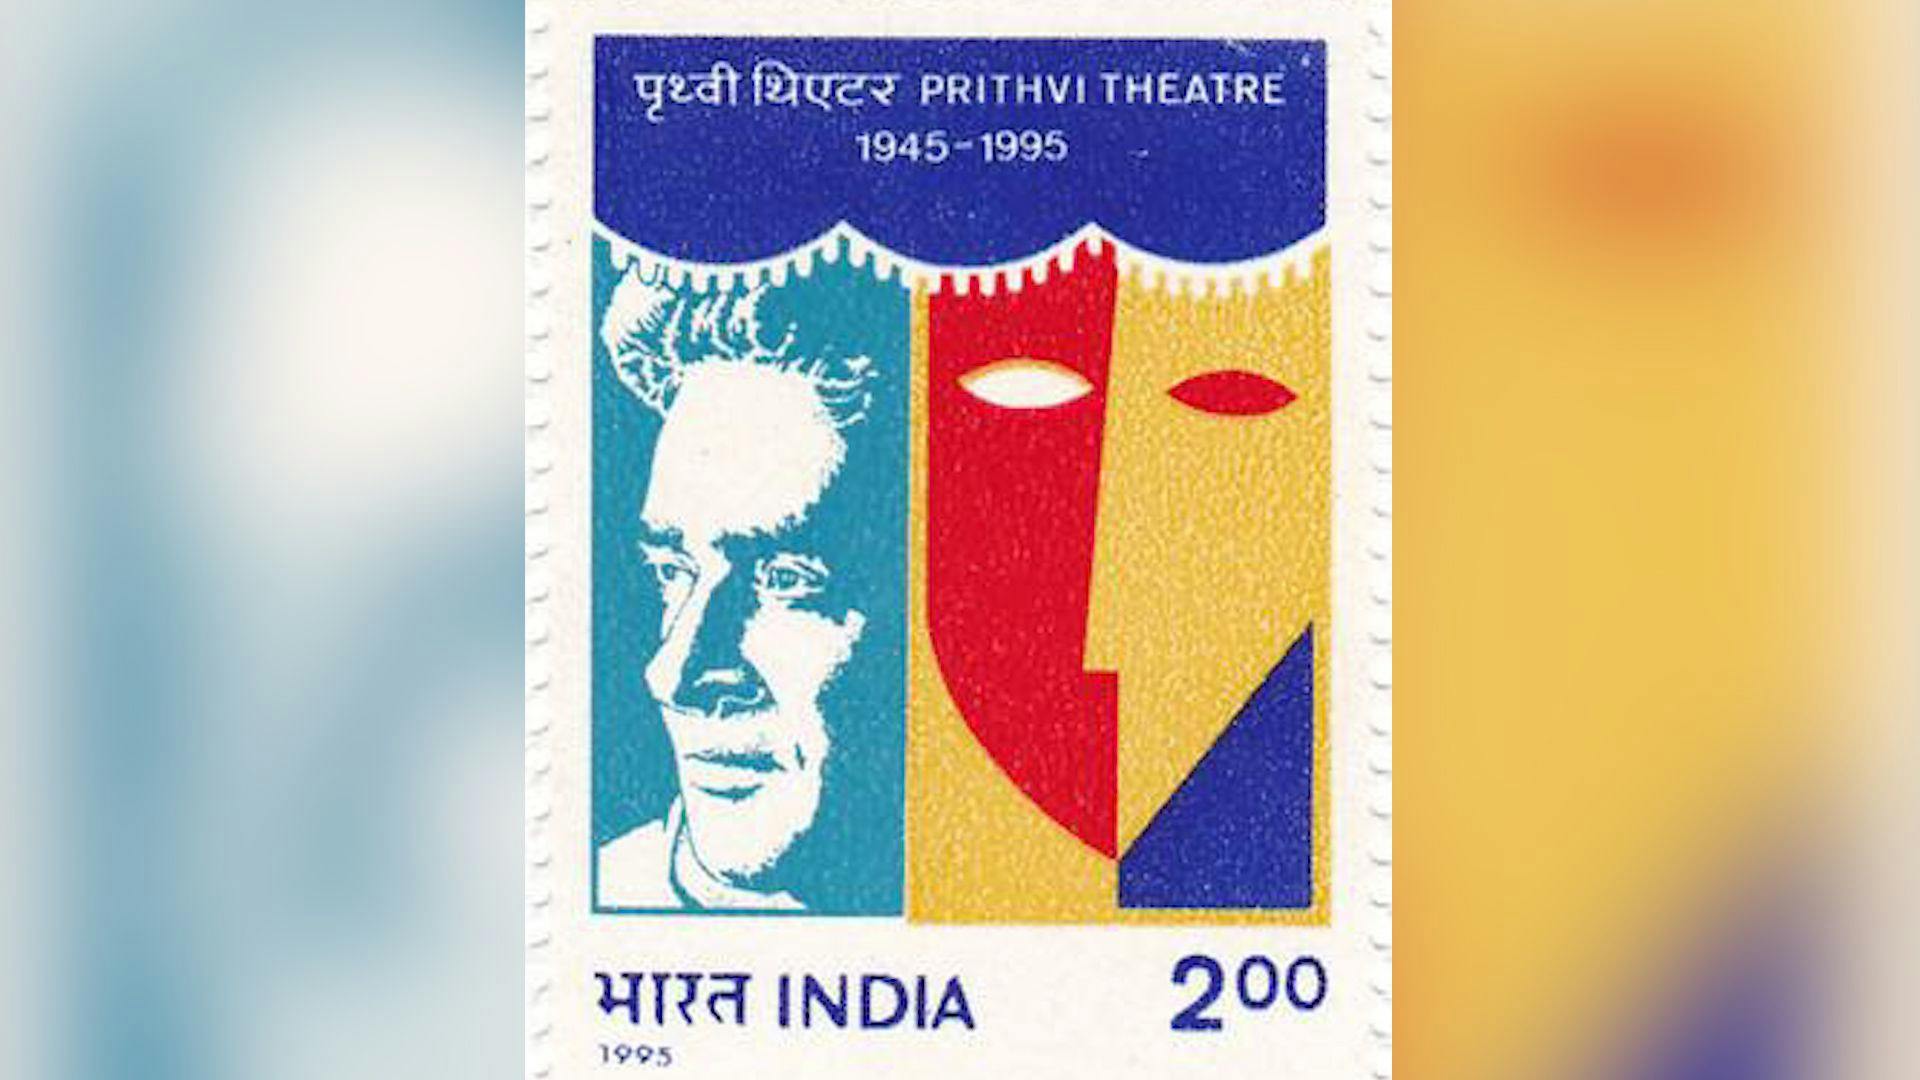 A 1995 stamp dedicated to Prithviraj Kapoor and Prithvi Theatres